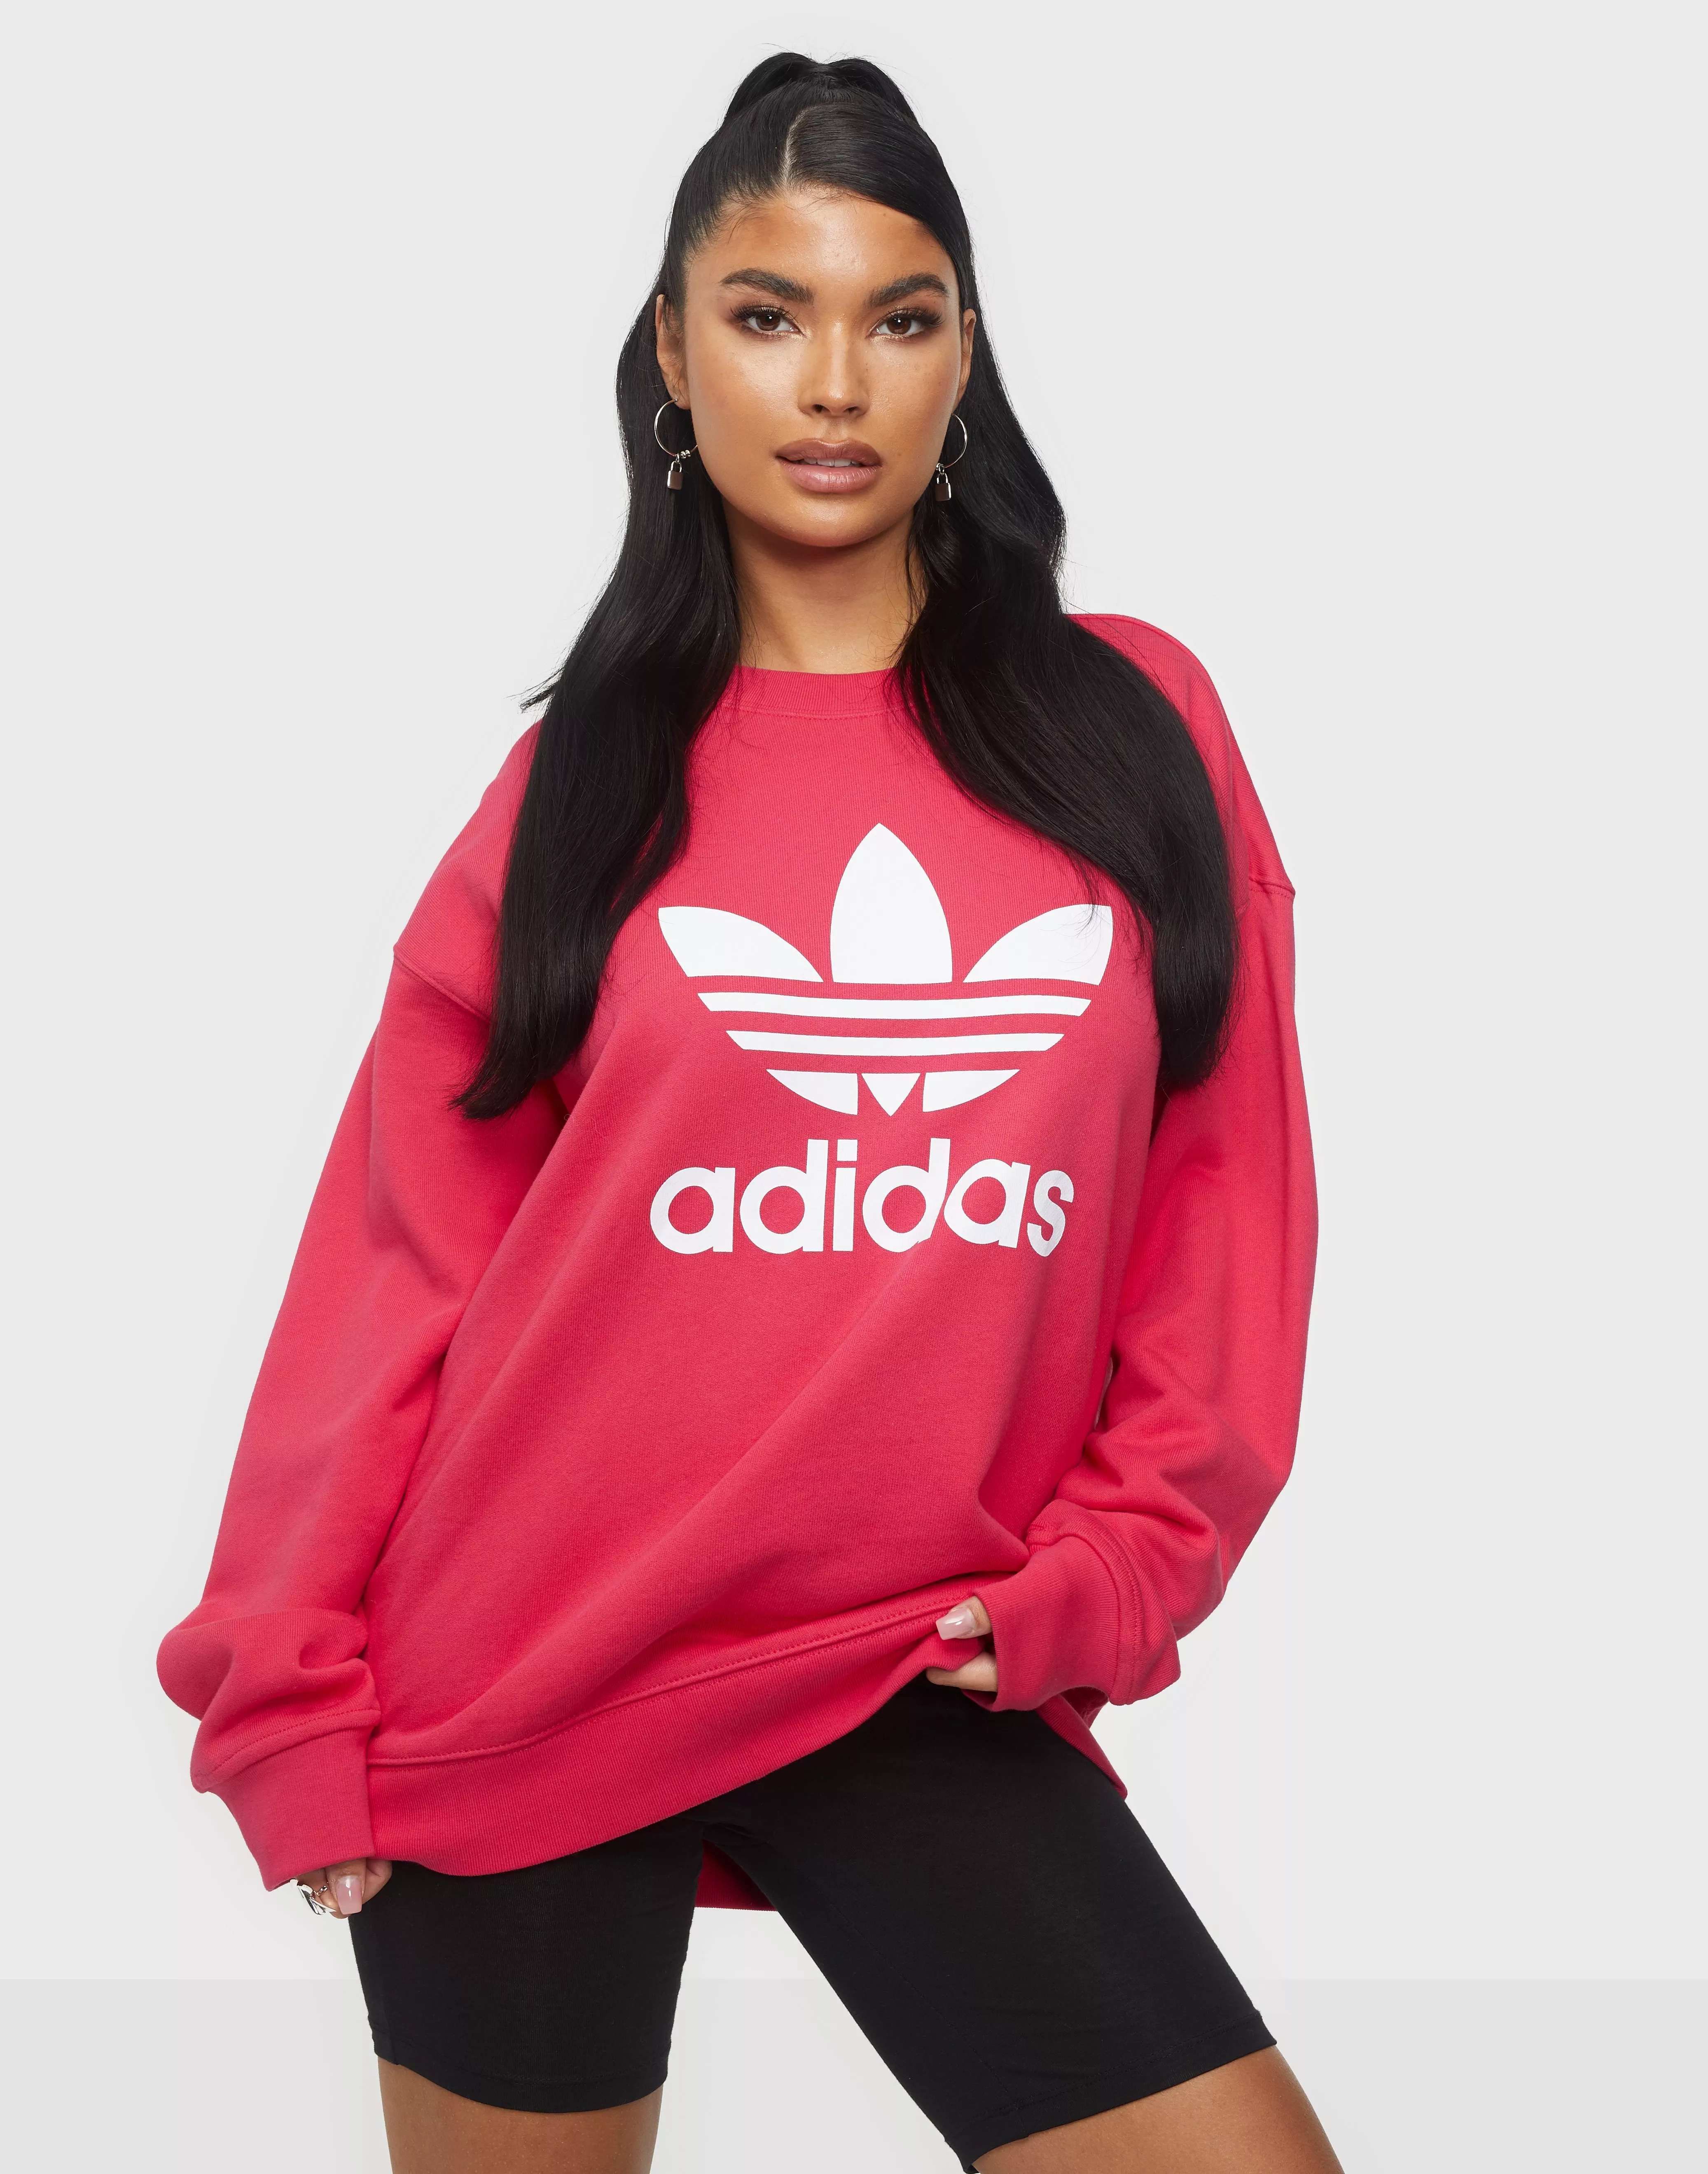 Buy Adidas Originals CREW TRF Pink SWEAT 